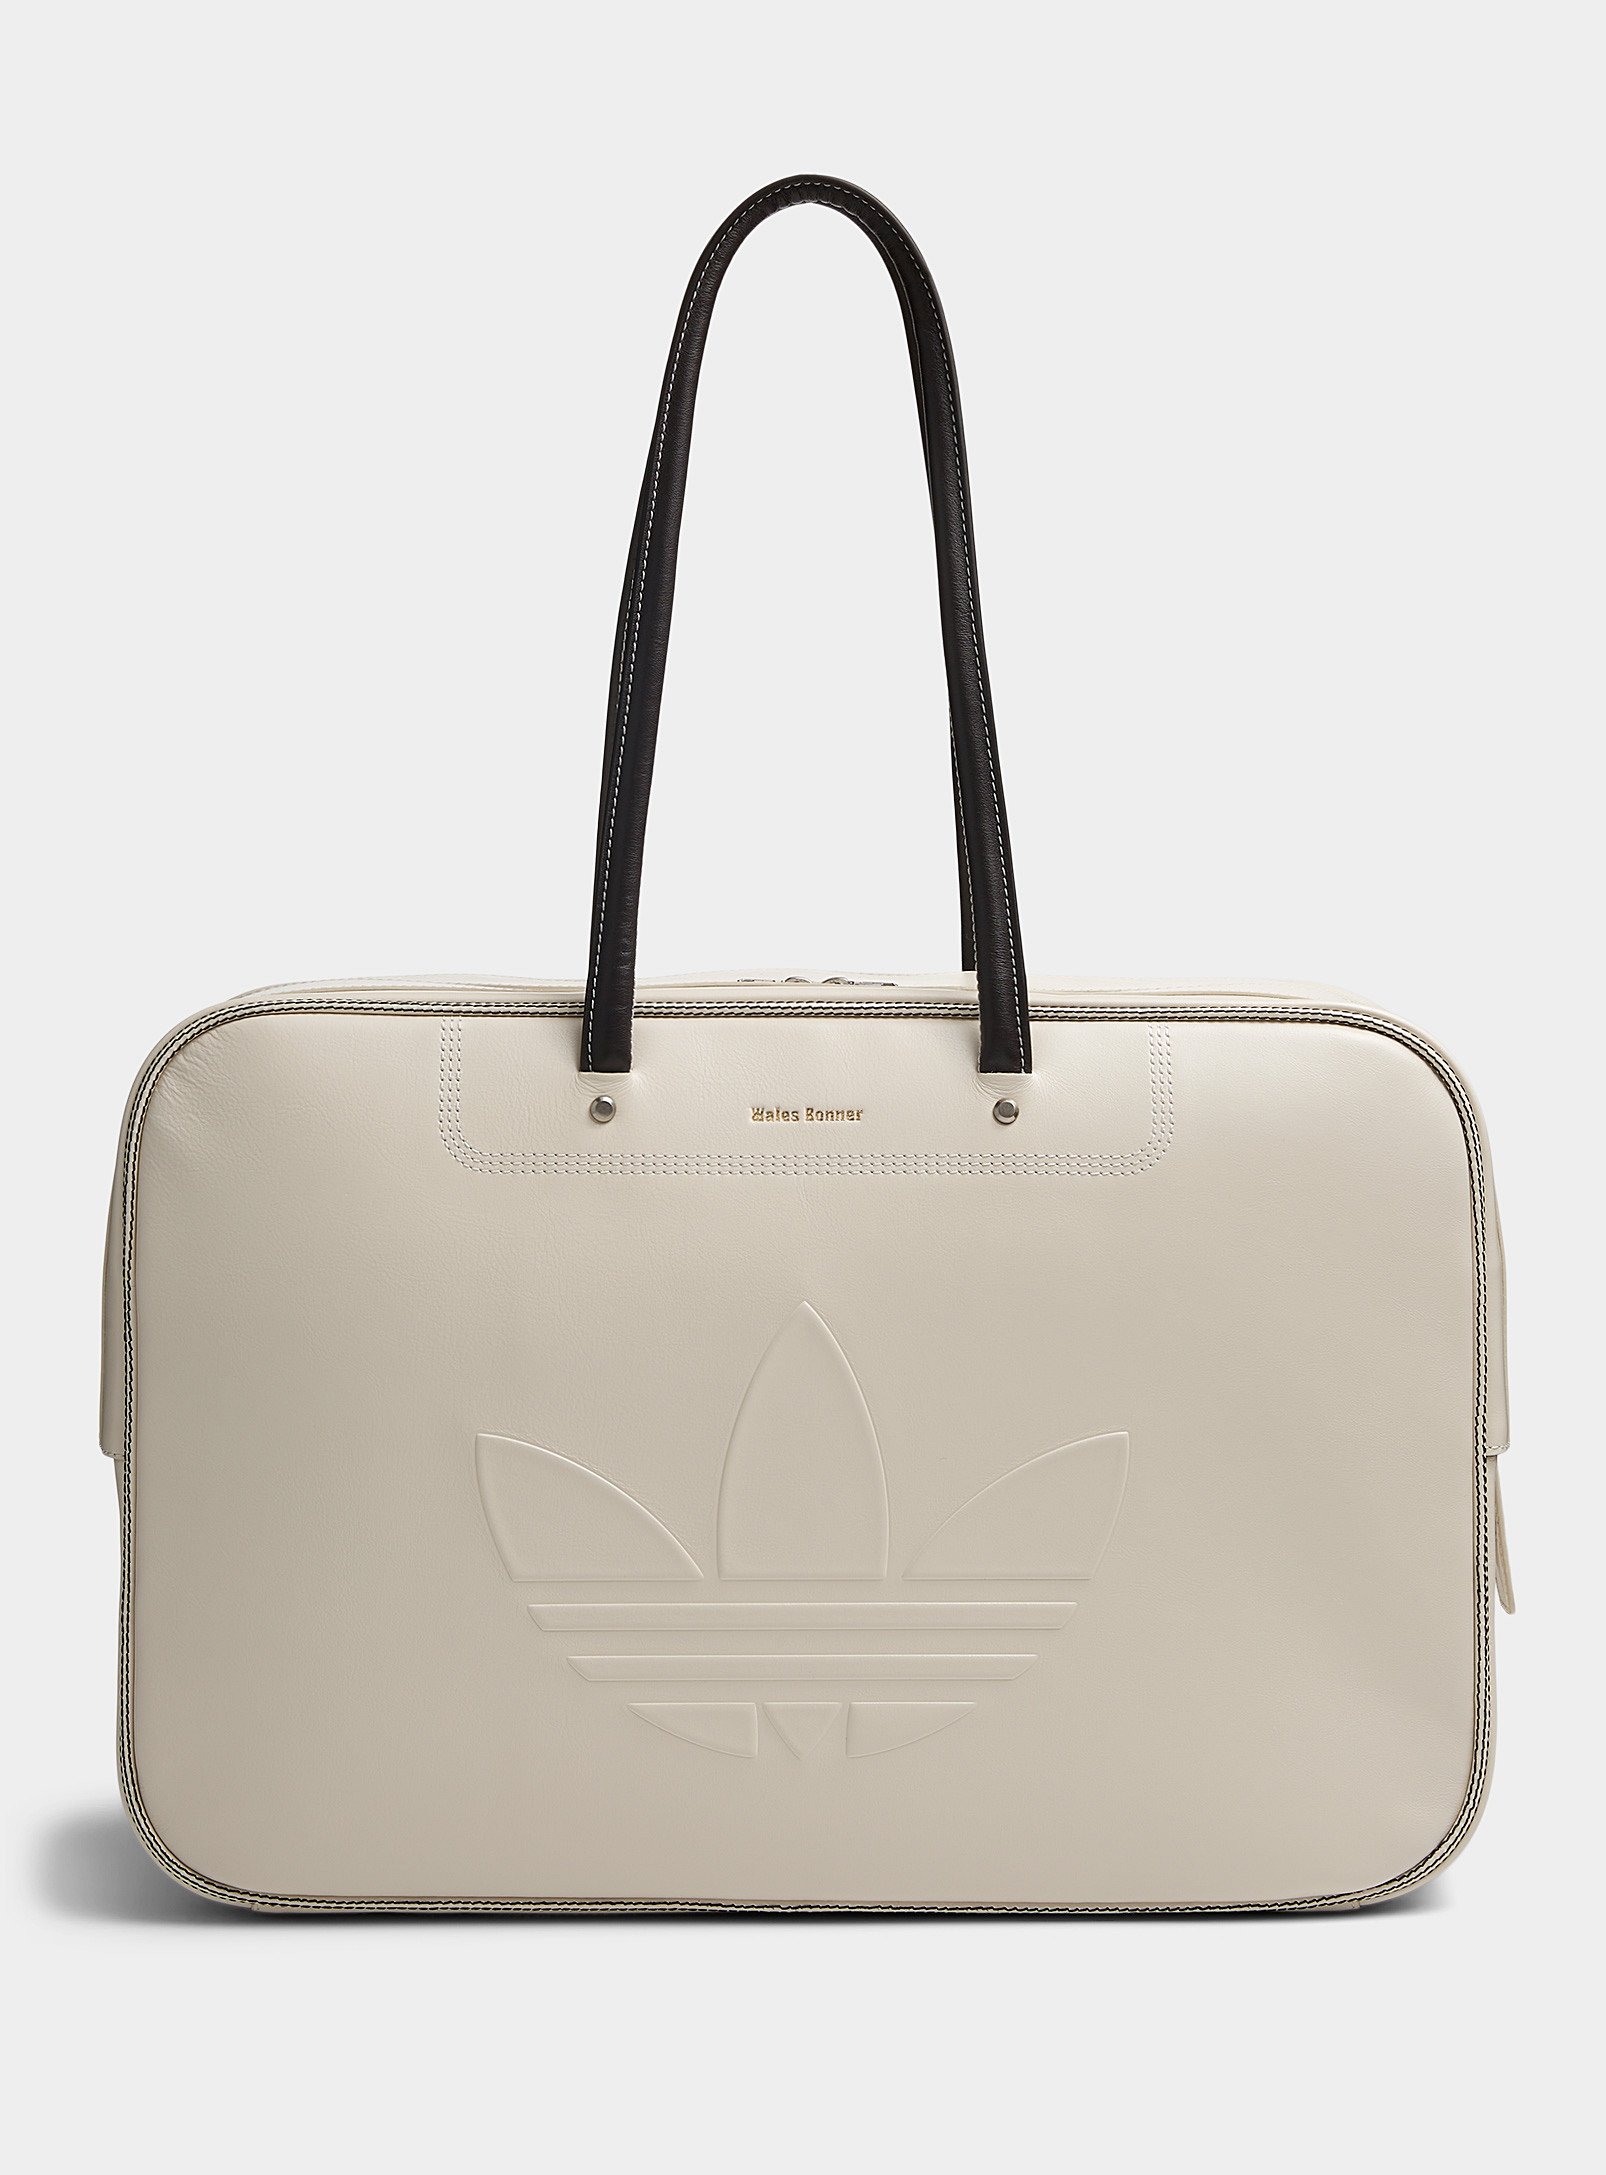 Adidas X Wales Bonner Embossed Logo Leather Weekender Bag In White